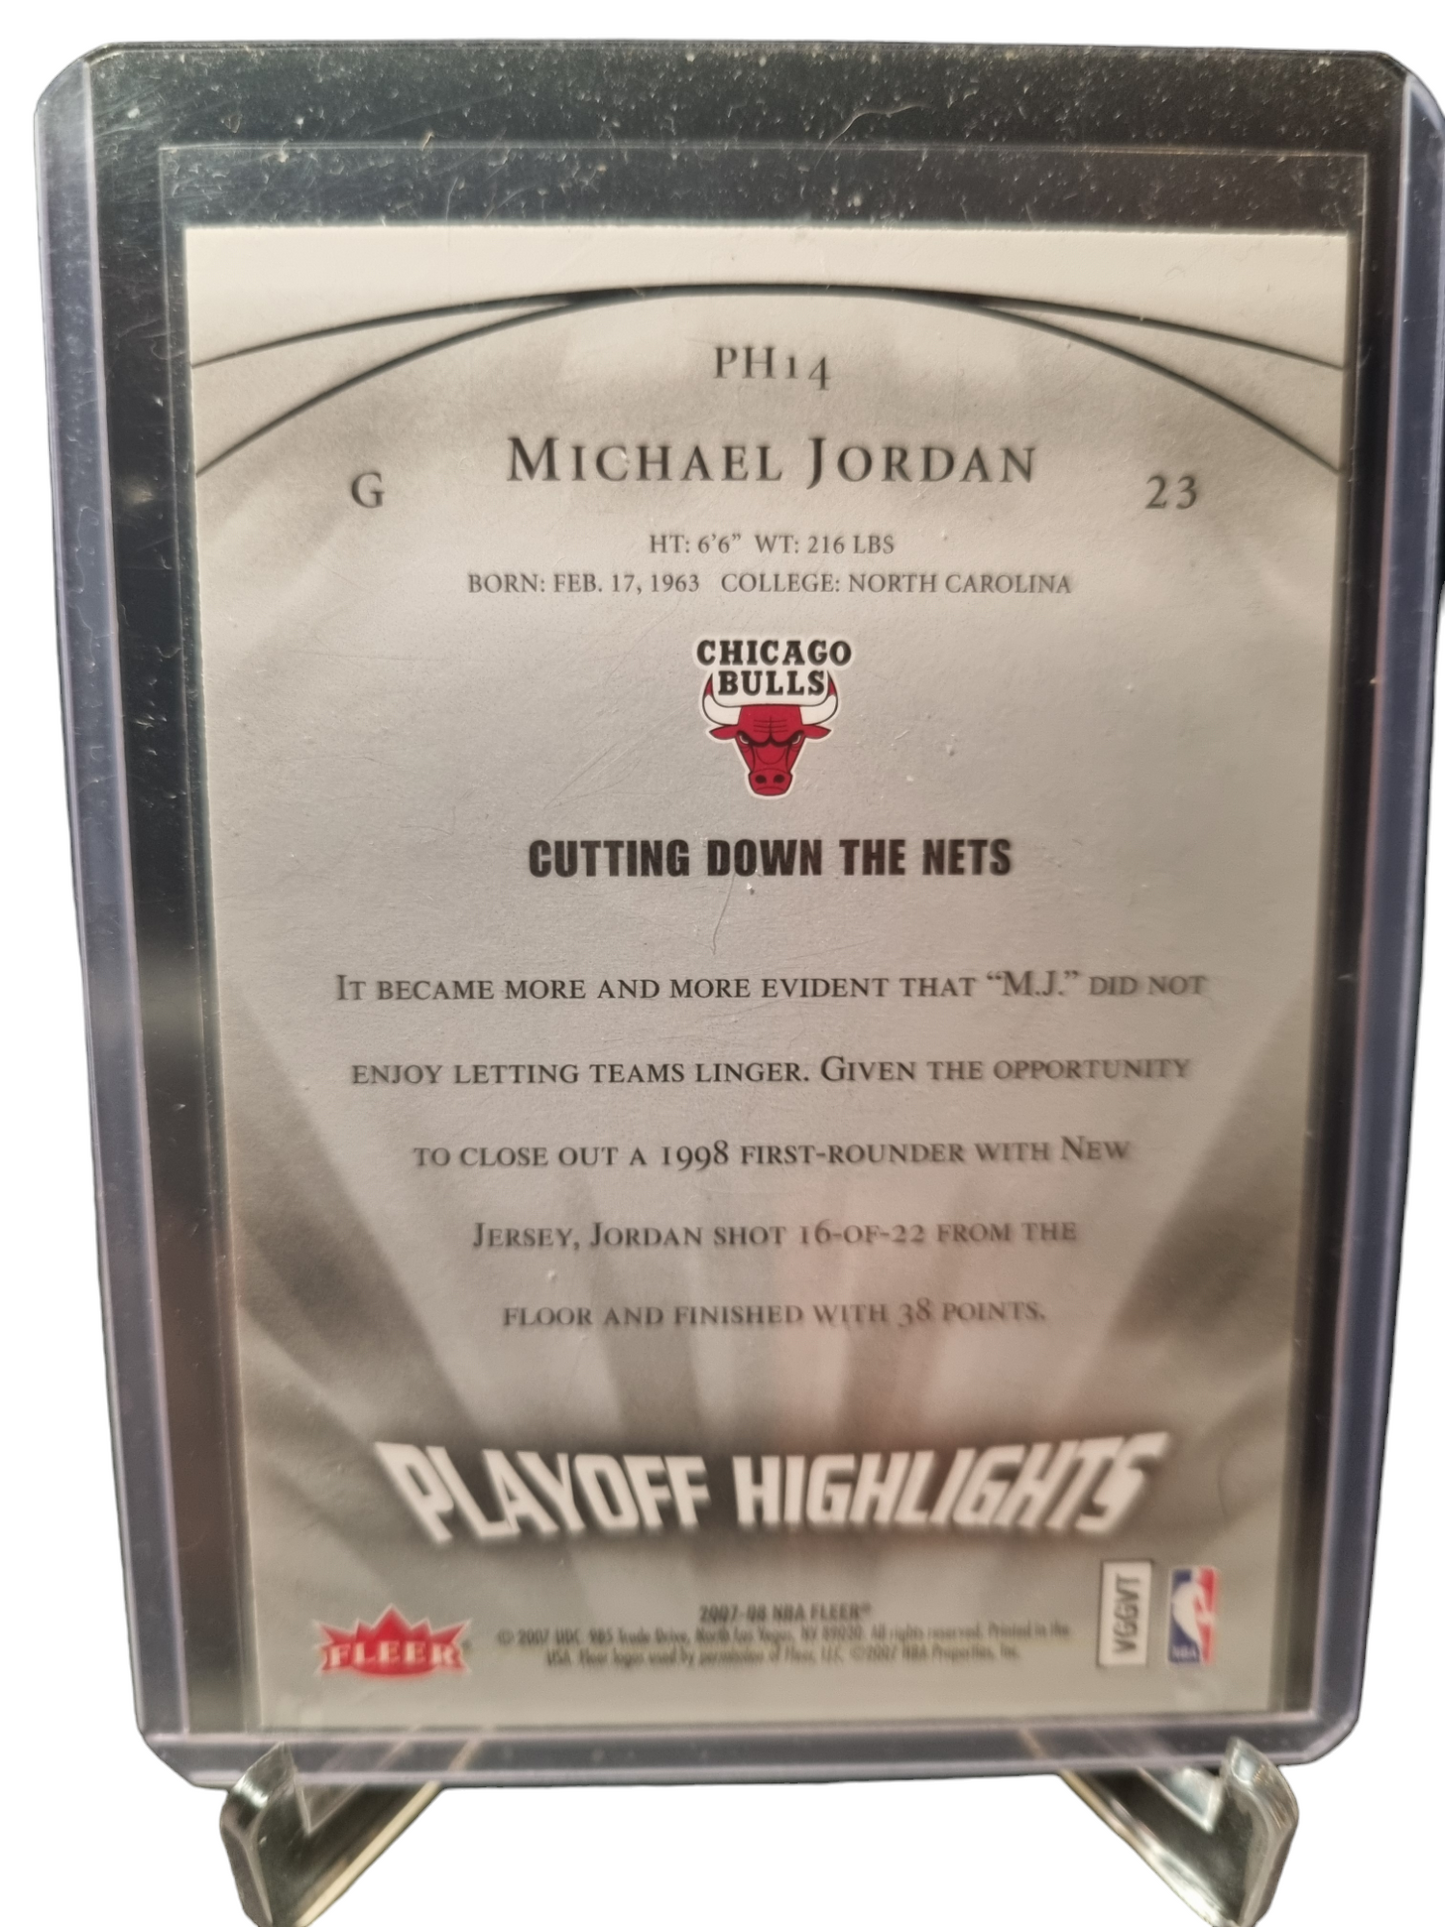 2007-08 Fleer #PH14 Michael Jordan Playoff Highlights